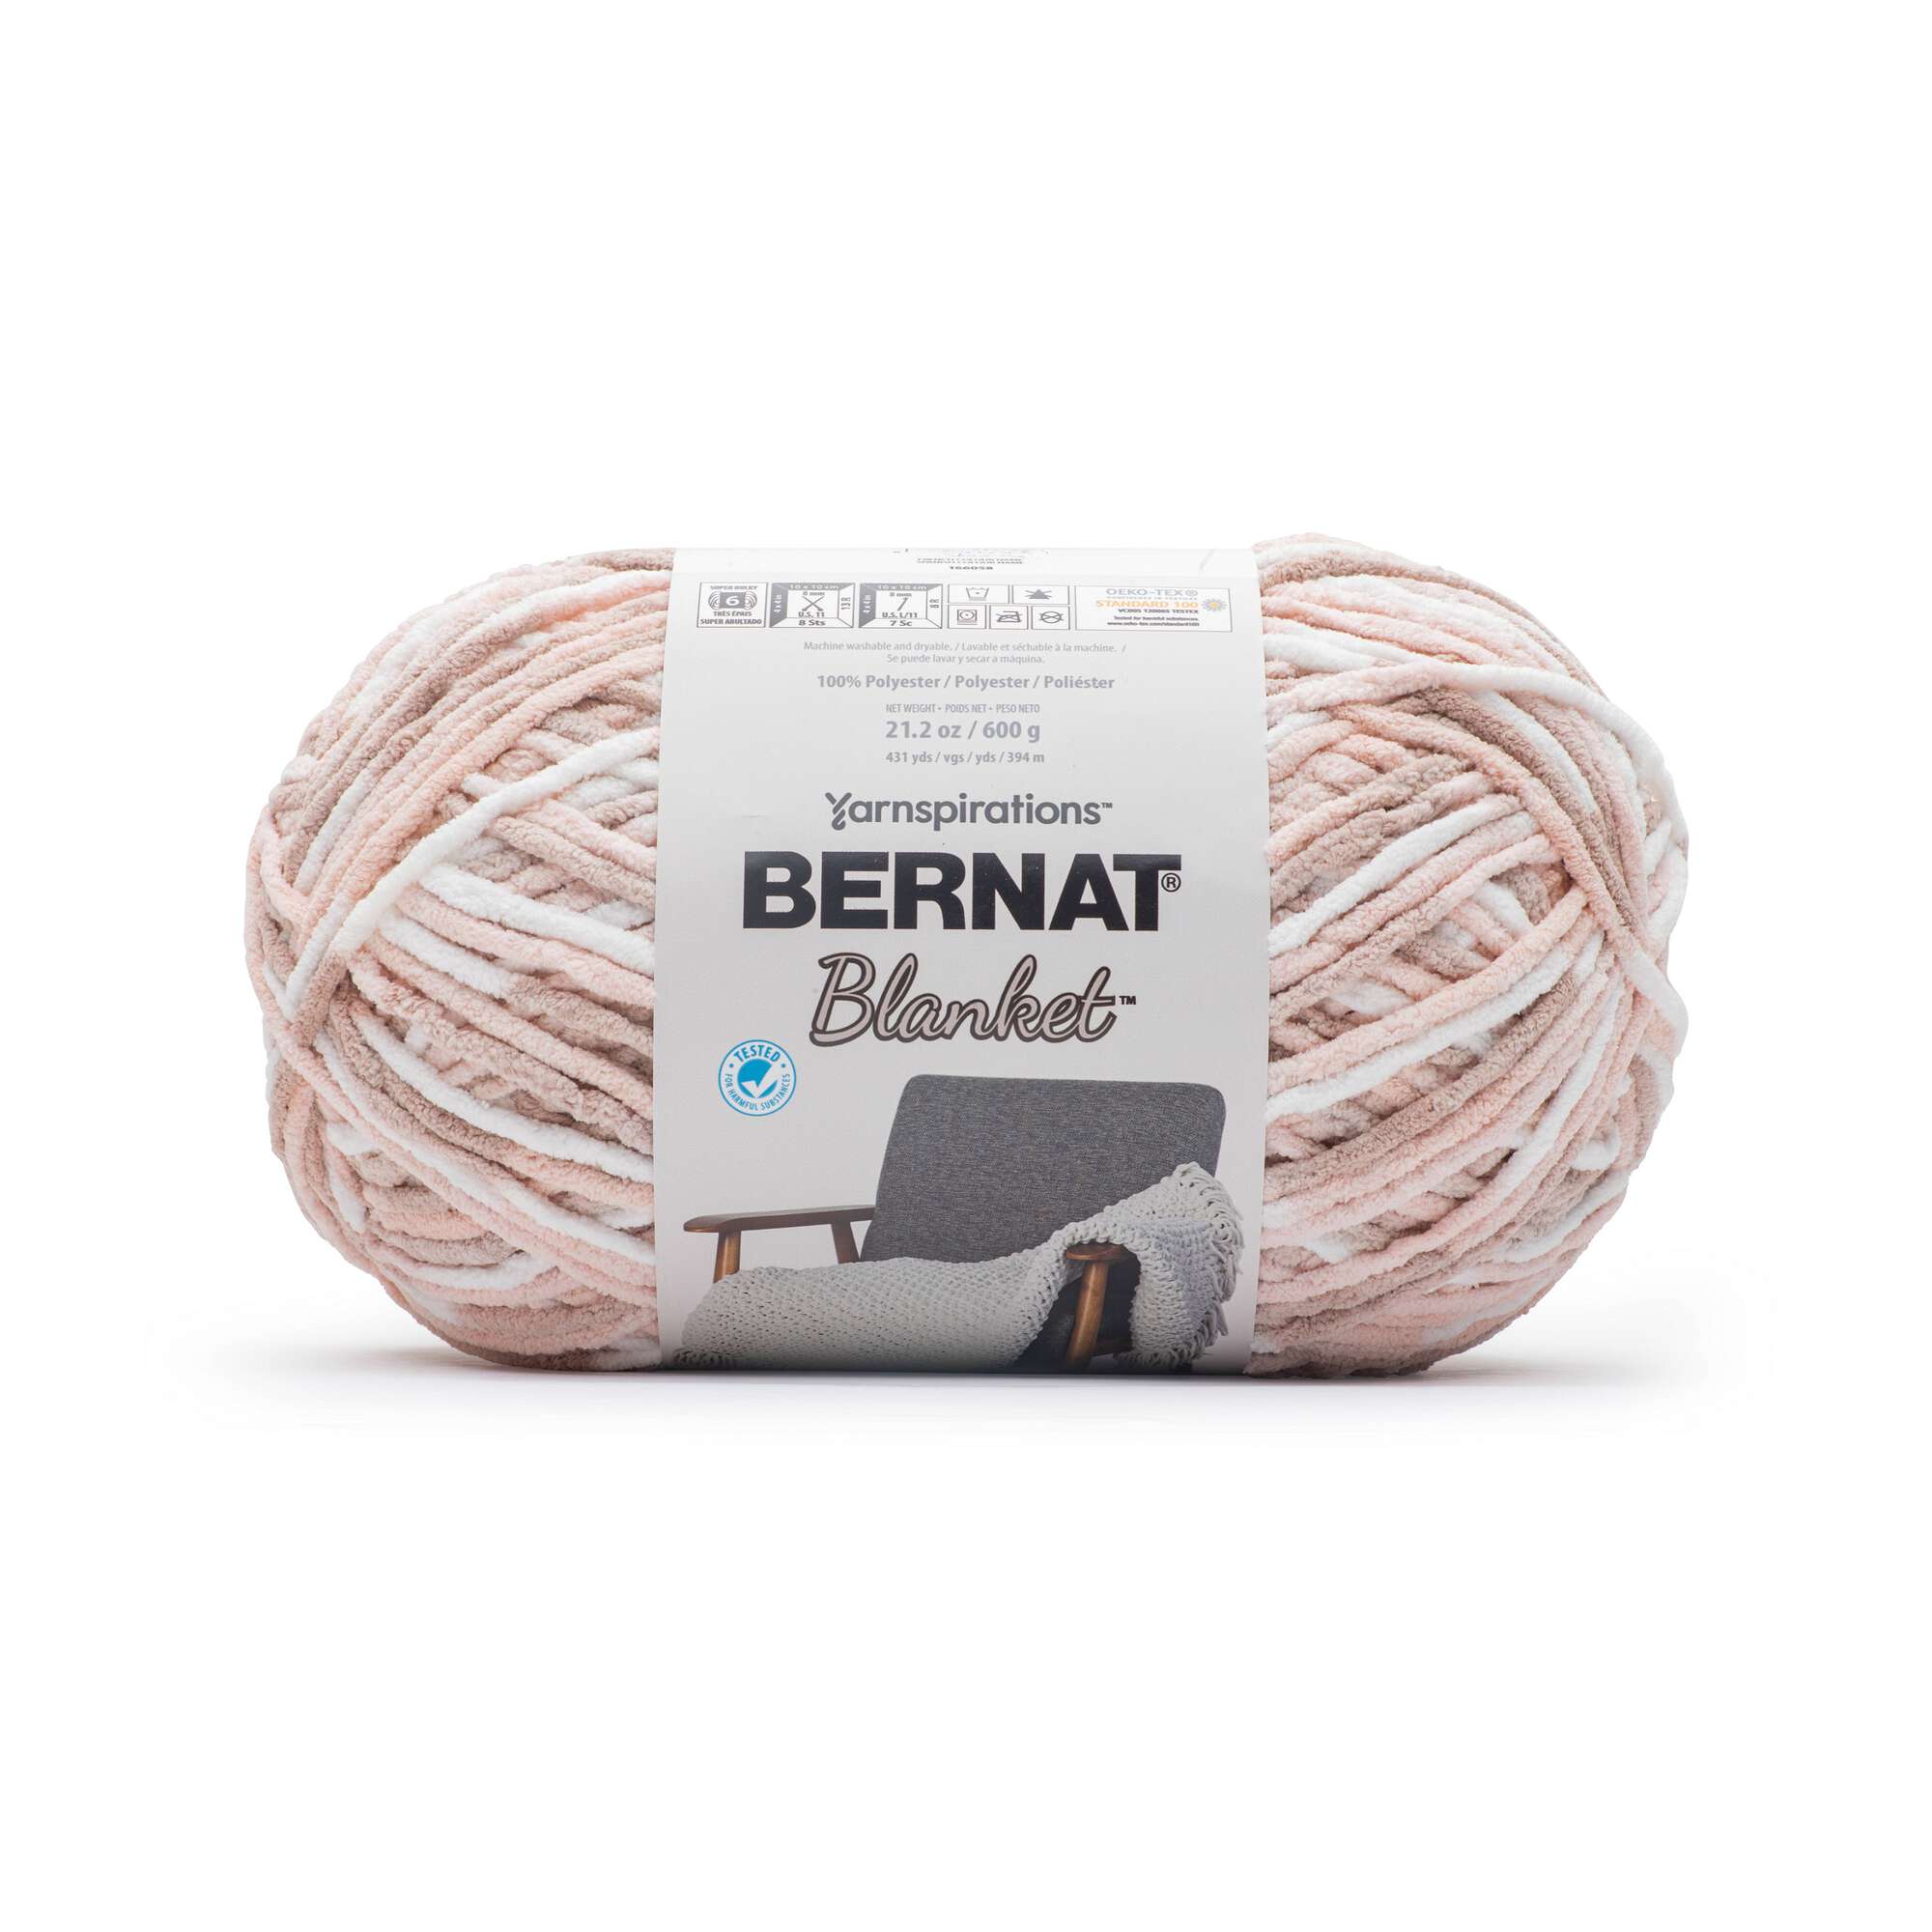 Bernat Blanket Yarn (600g/21.2oz) - Clearance Shades